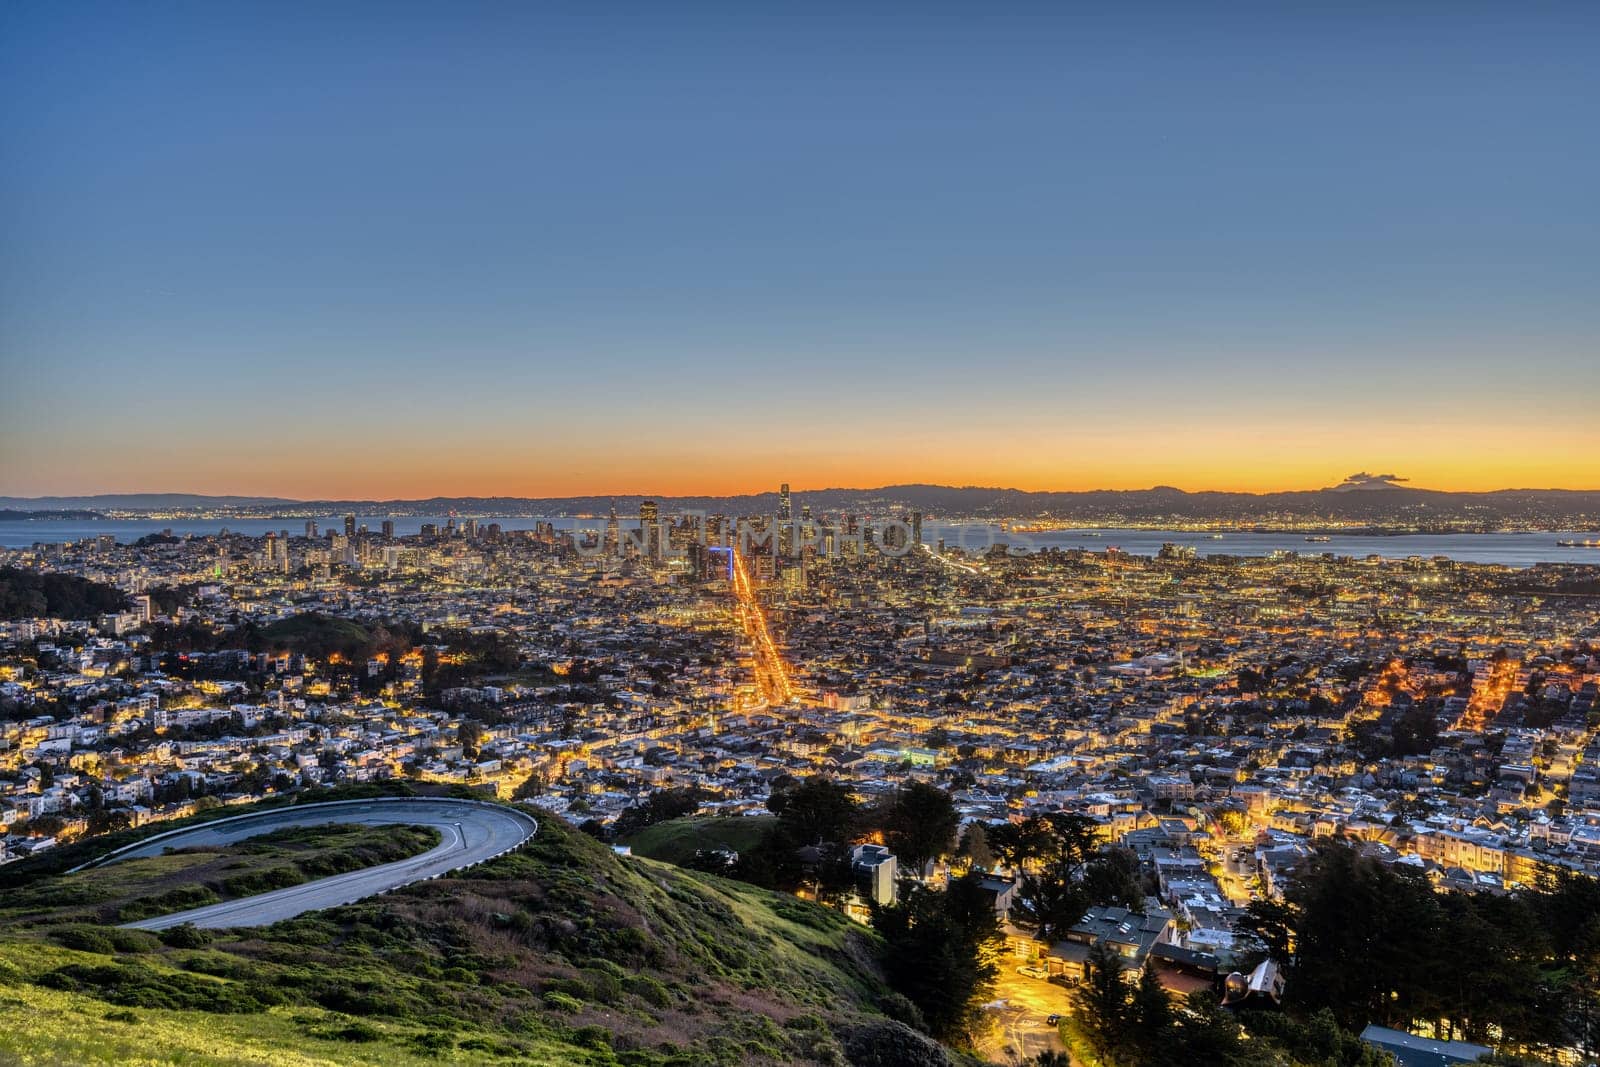 The skyline of San Francisco in California before sunrise